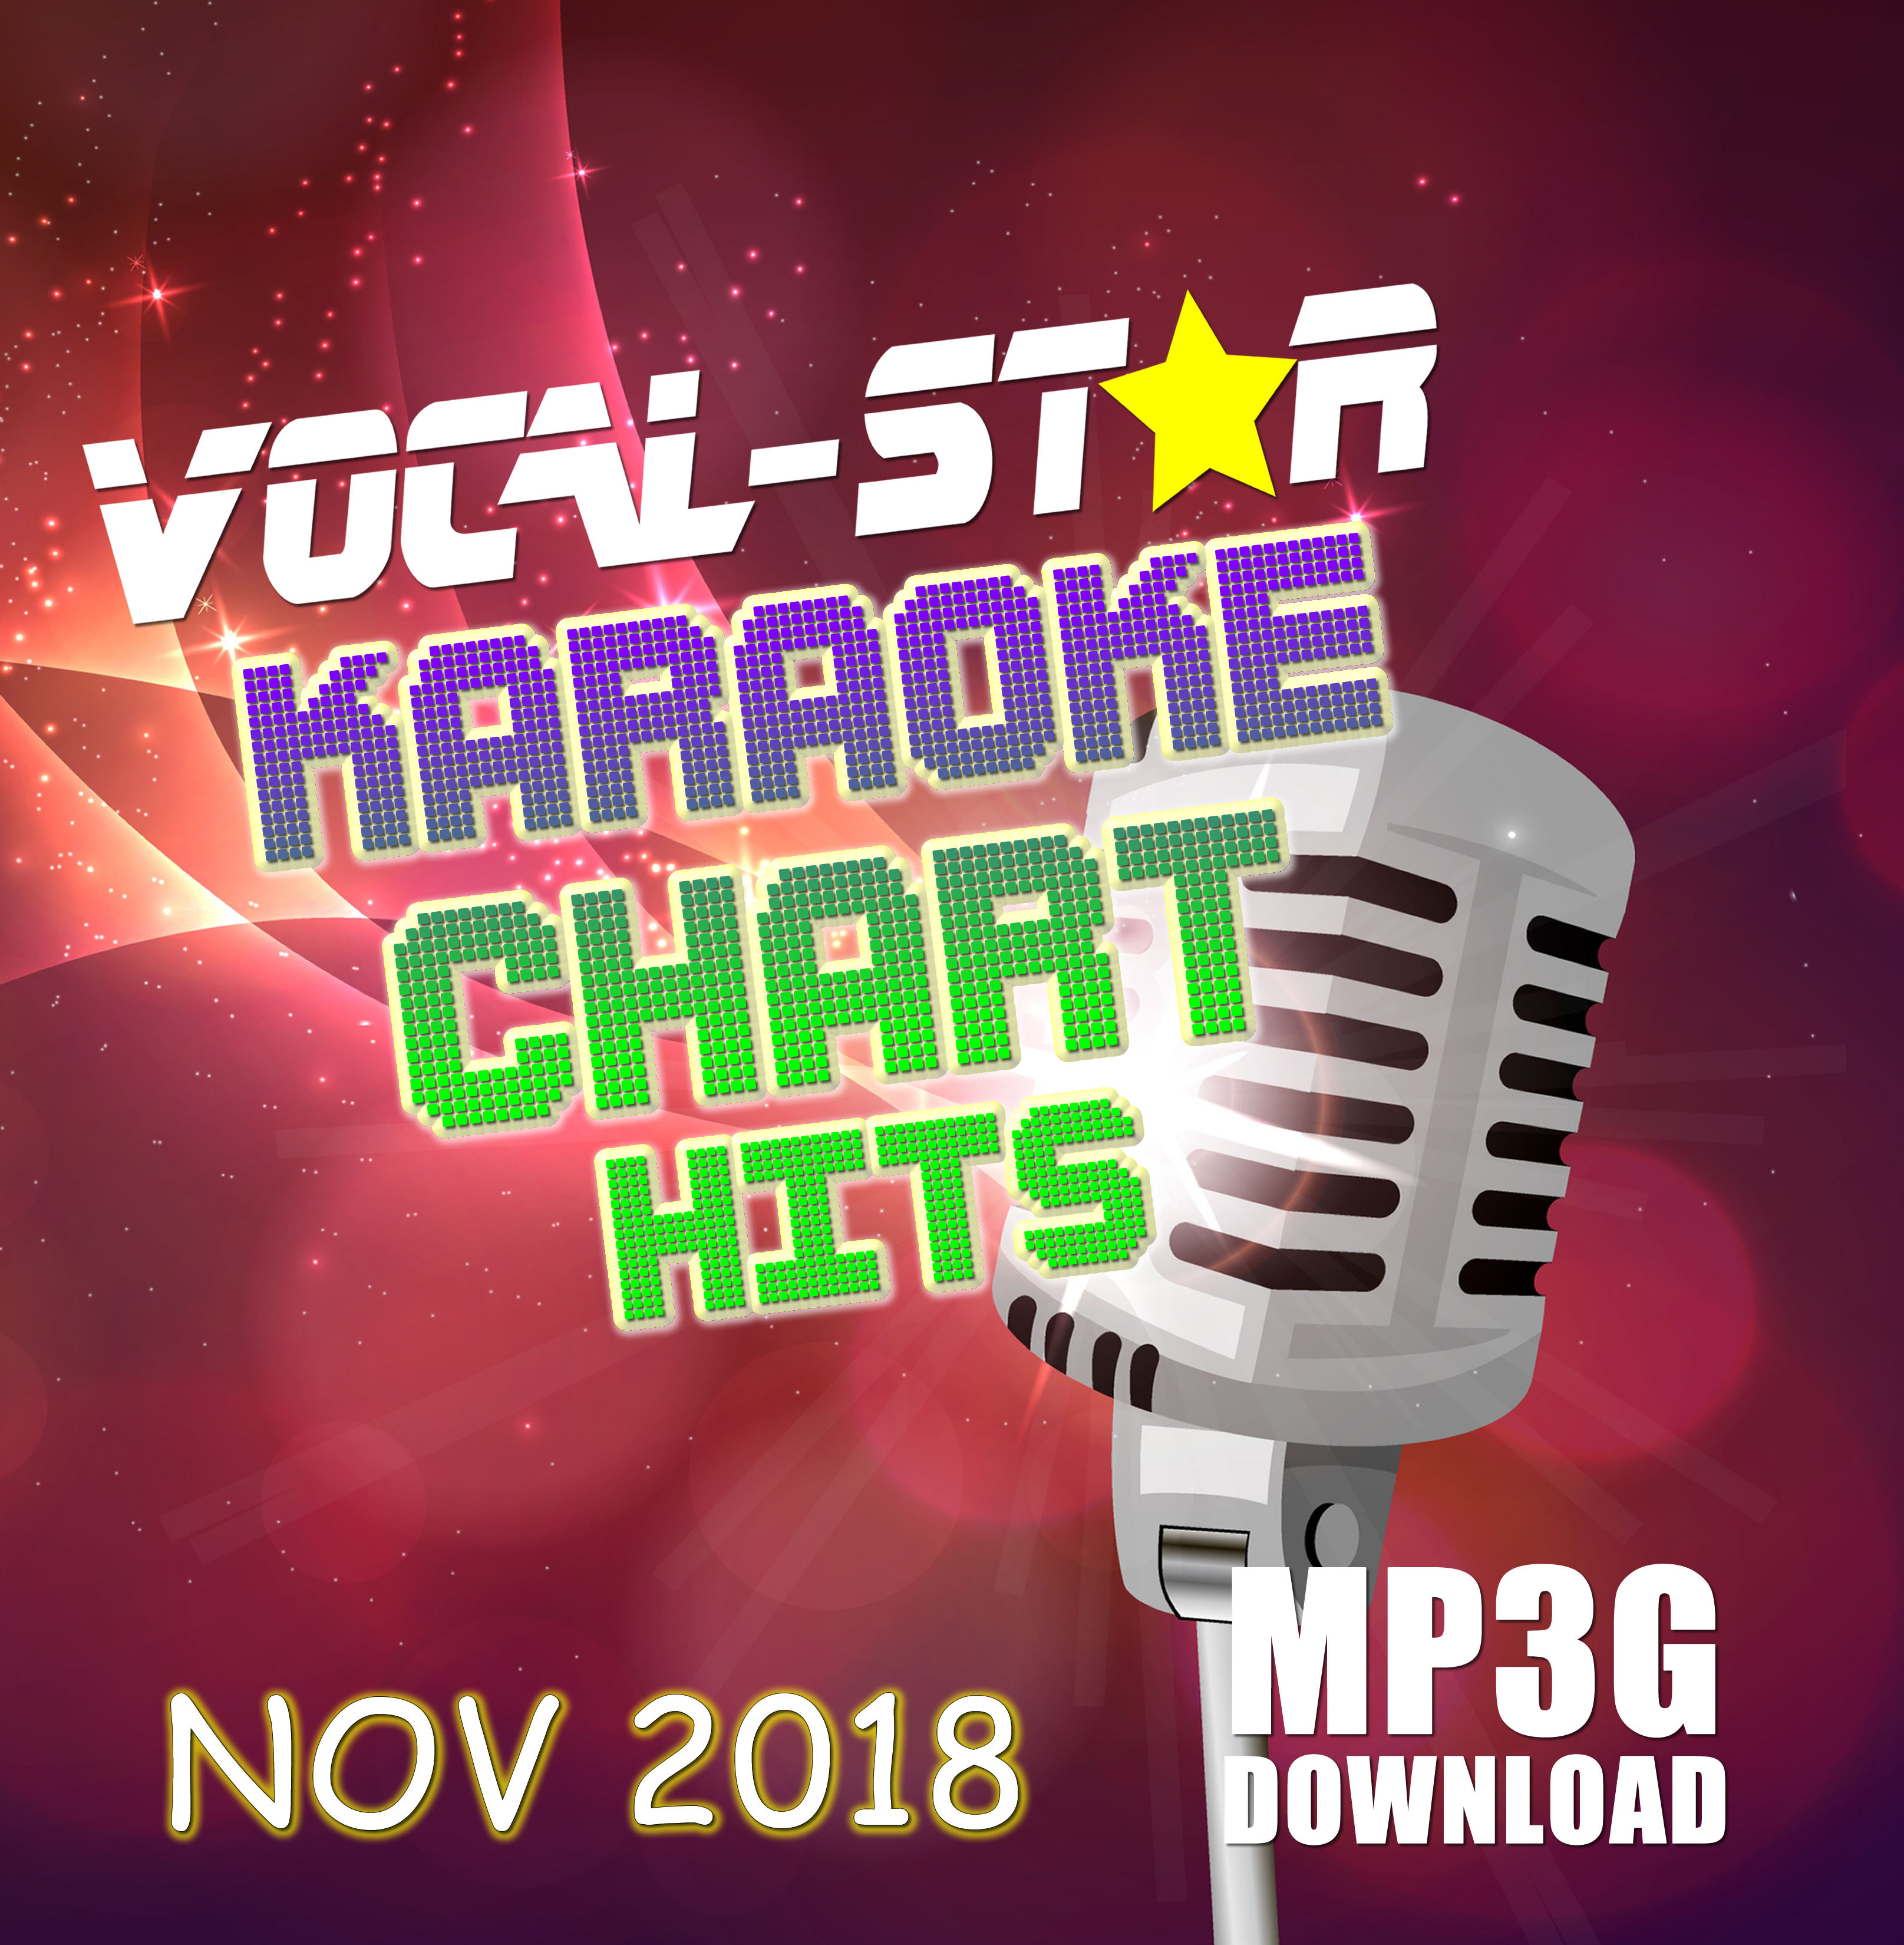 Vocal-Star November 2018 Hits Digital Download